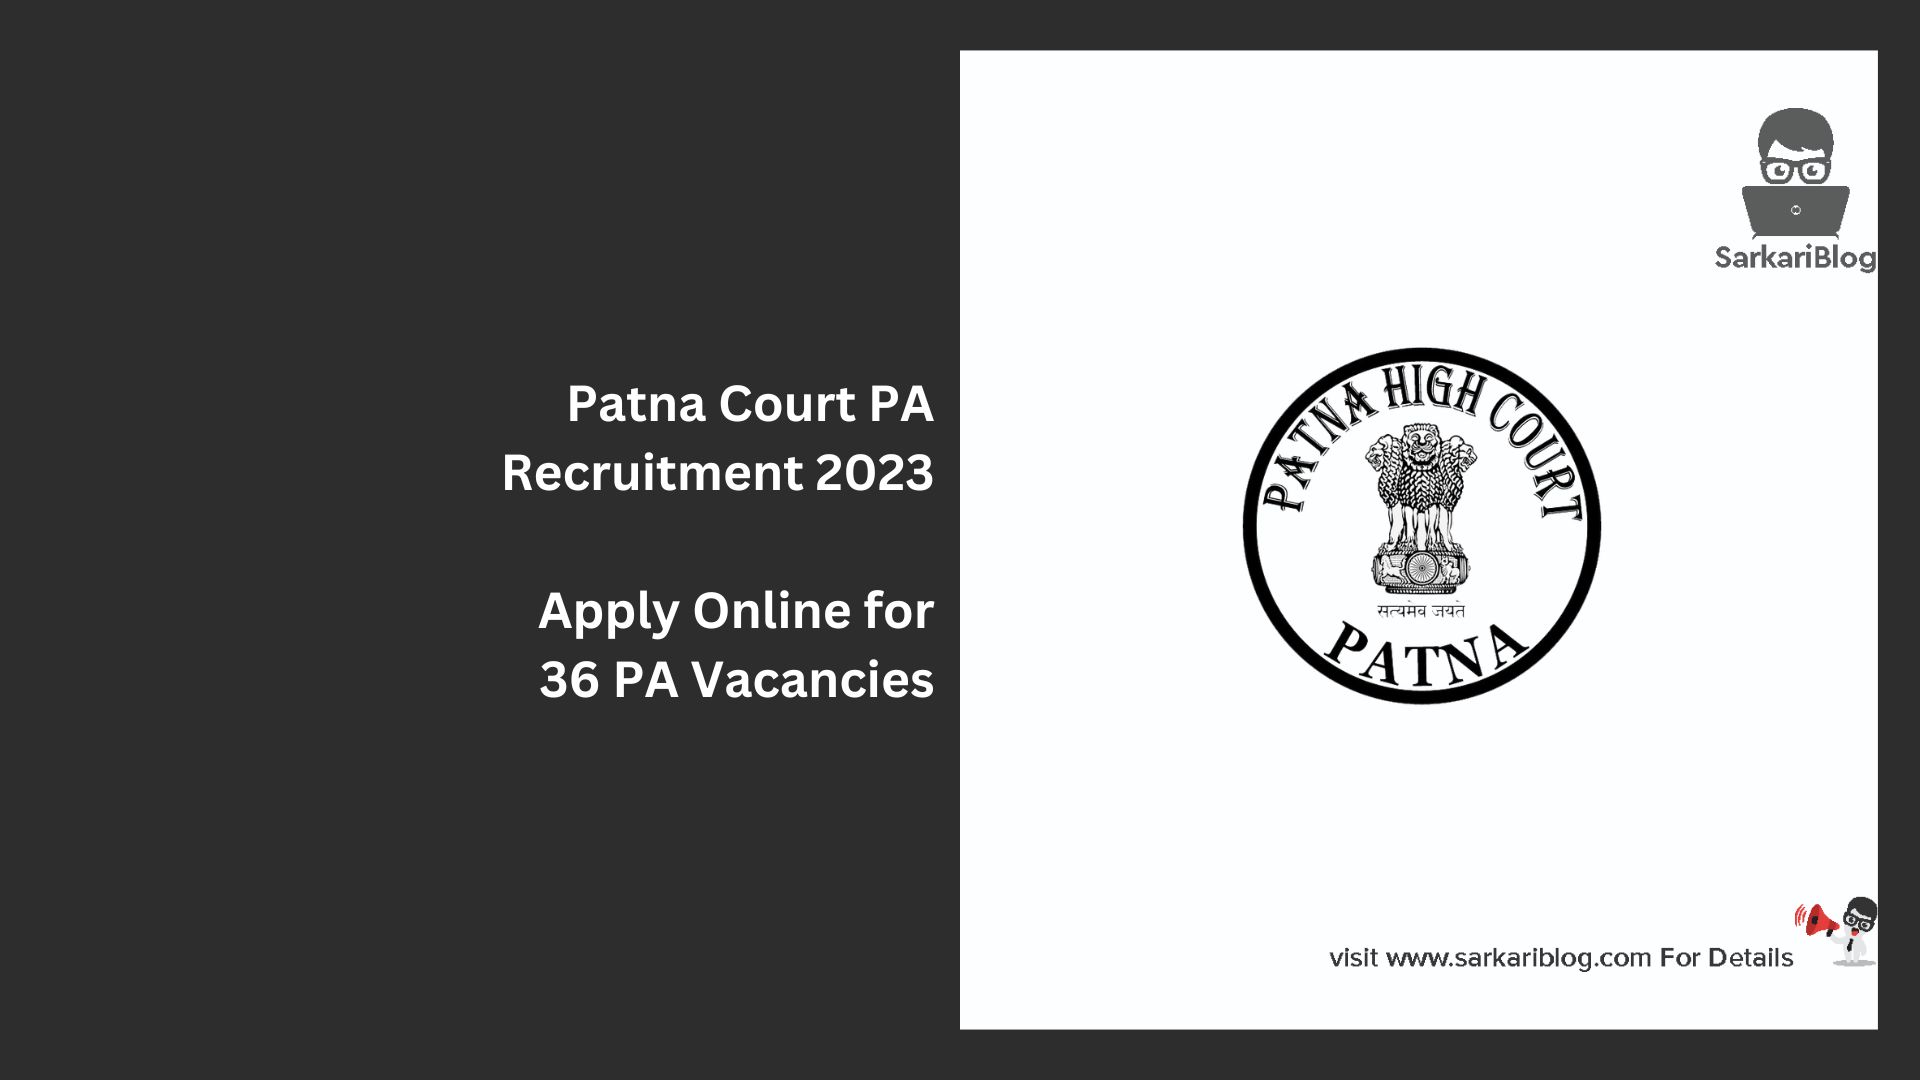 Patna Court PA Recruitment 2023